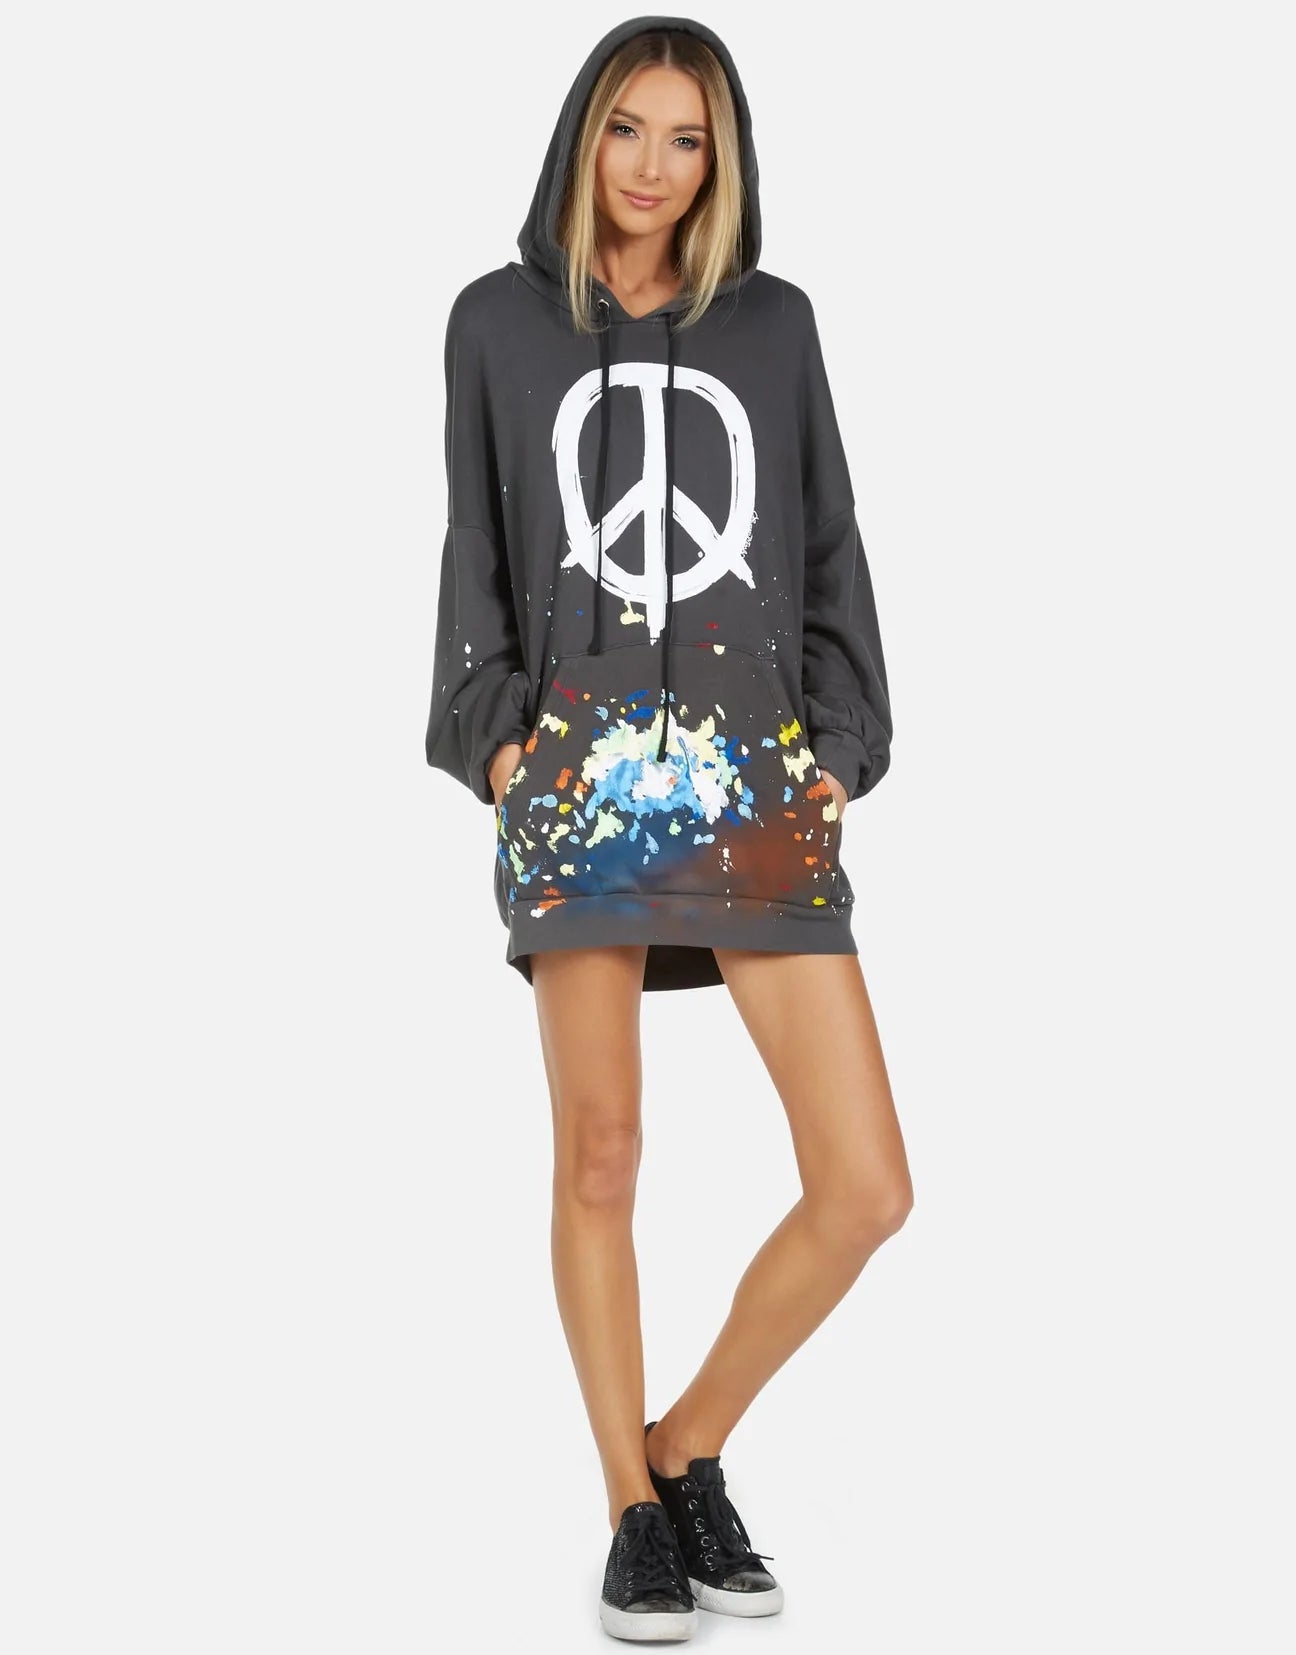 Shop Lauren Moshi Desiree Brush Peace Hoodie Dress - Premium Hooded Sweatshirt from Lauren Moshi Online now at Spoiled Brat 